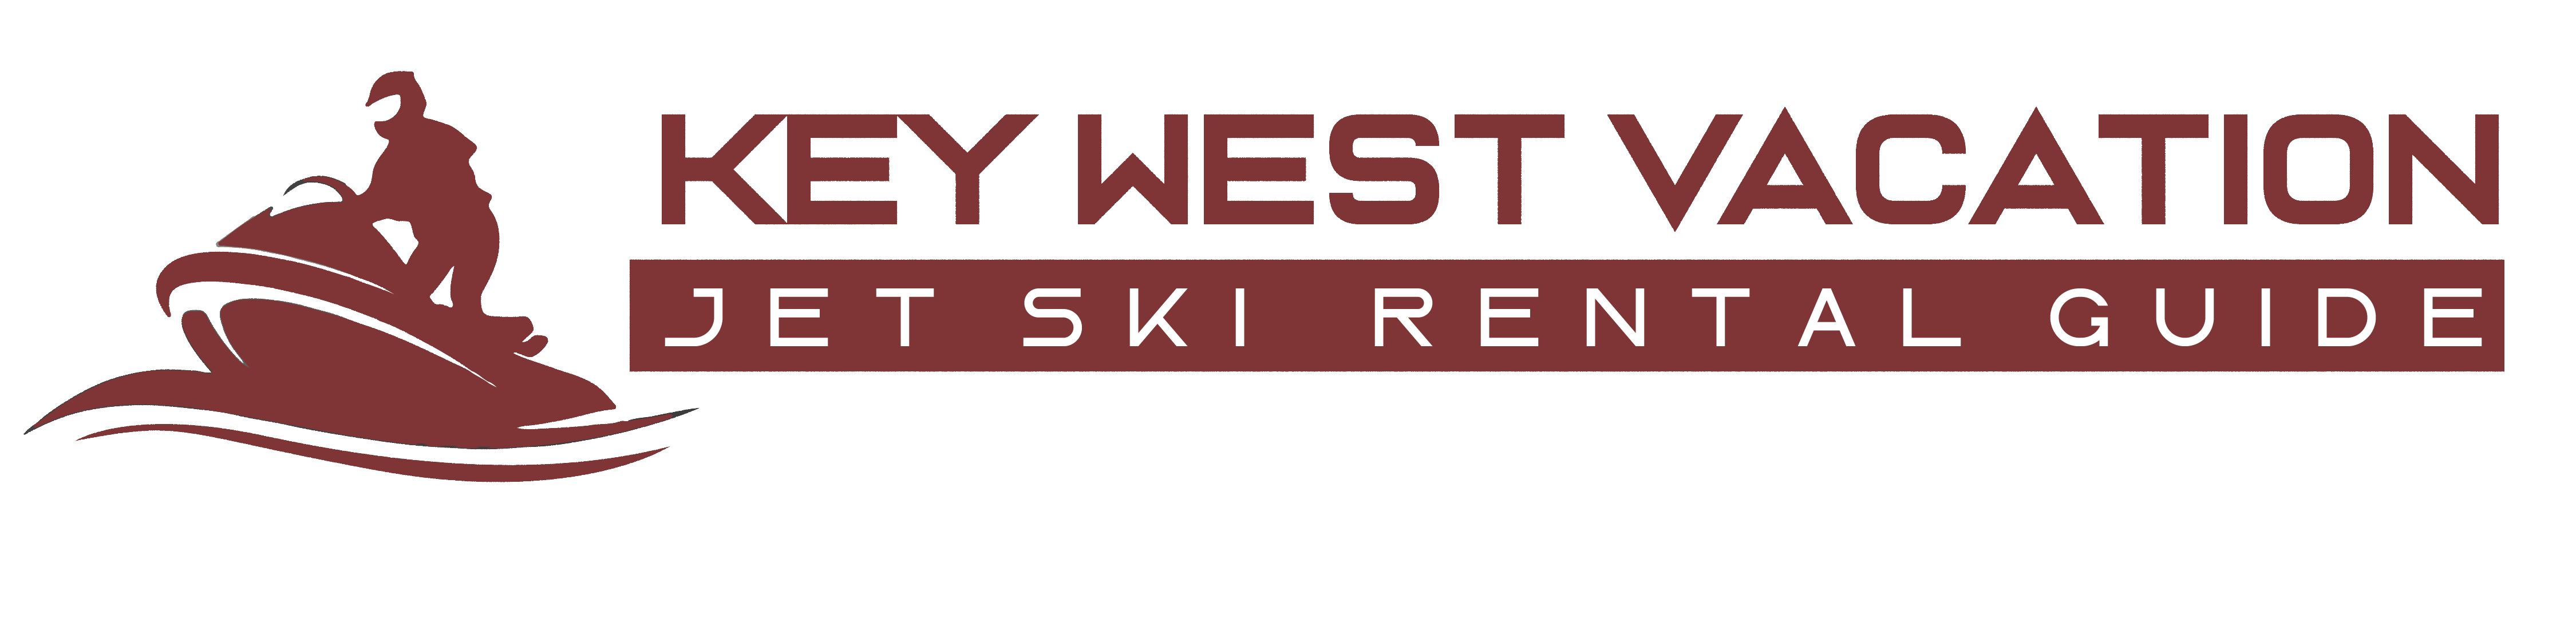 Key West Vacation Jet Ski Rental Guide